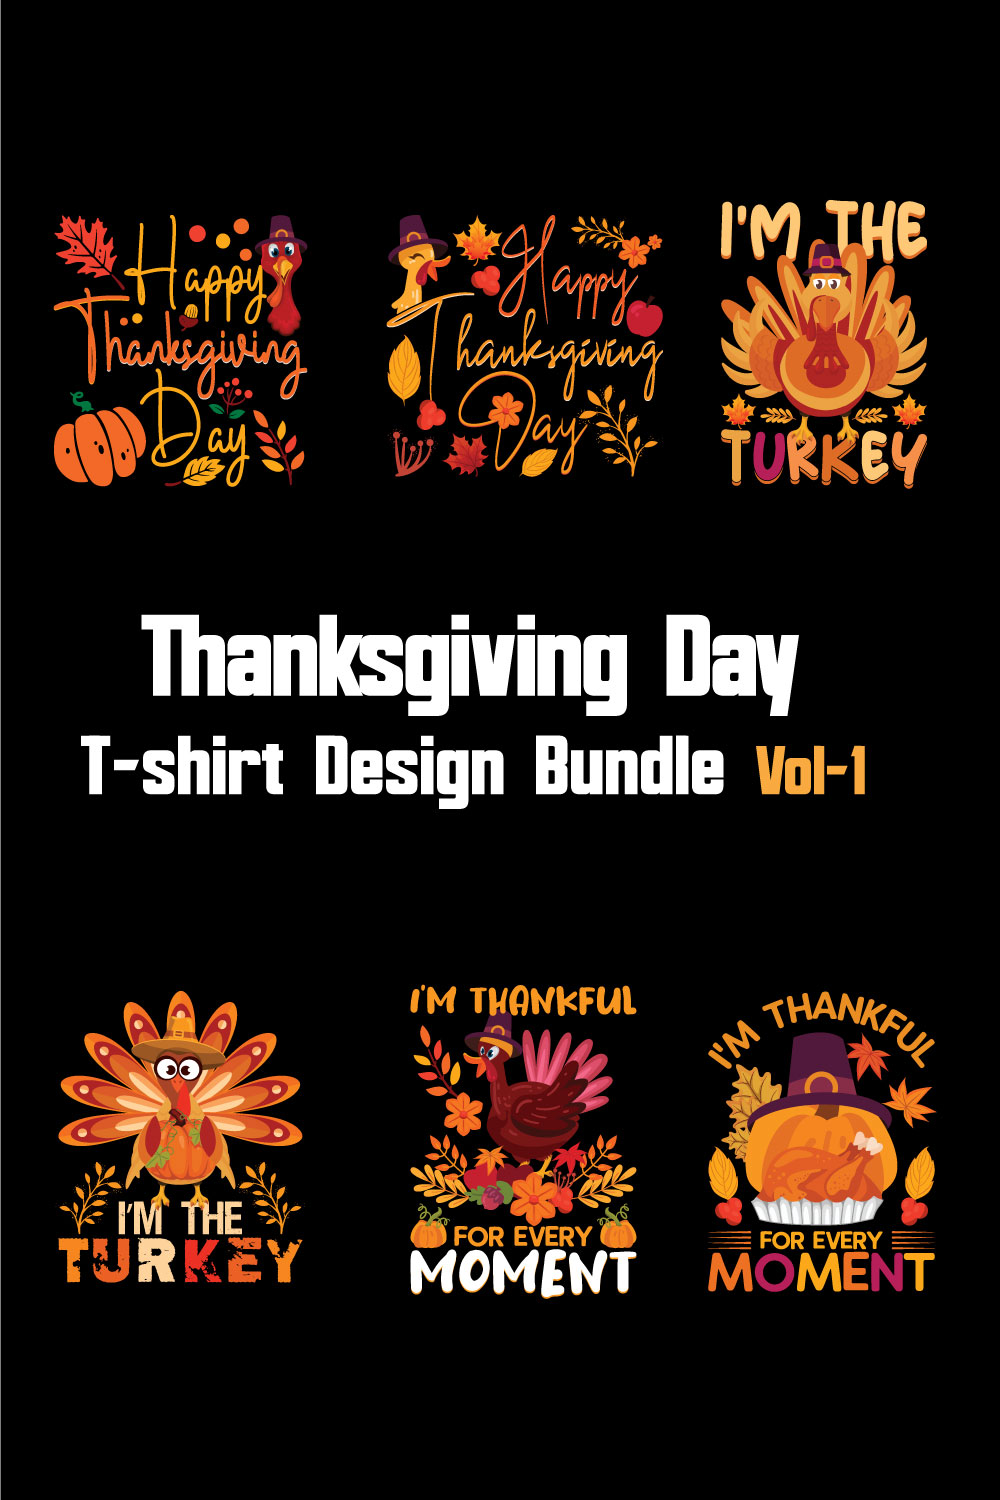 Thanksgiving Day T-shirt Design Bundle Vol-1 pinterest preview image.